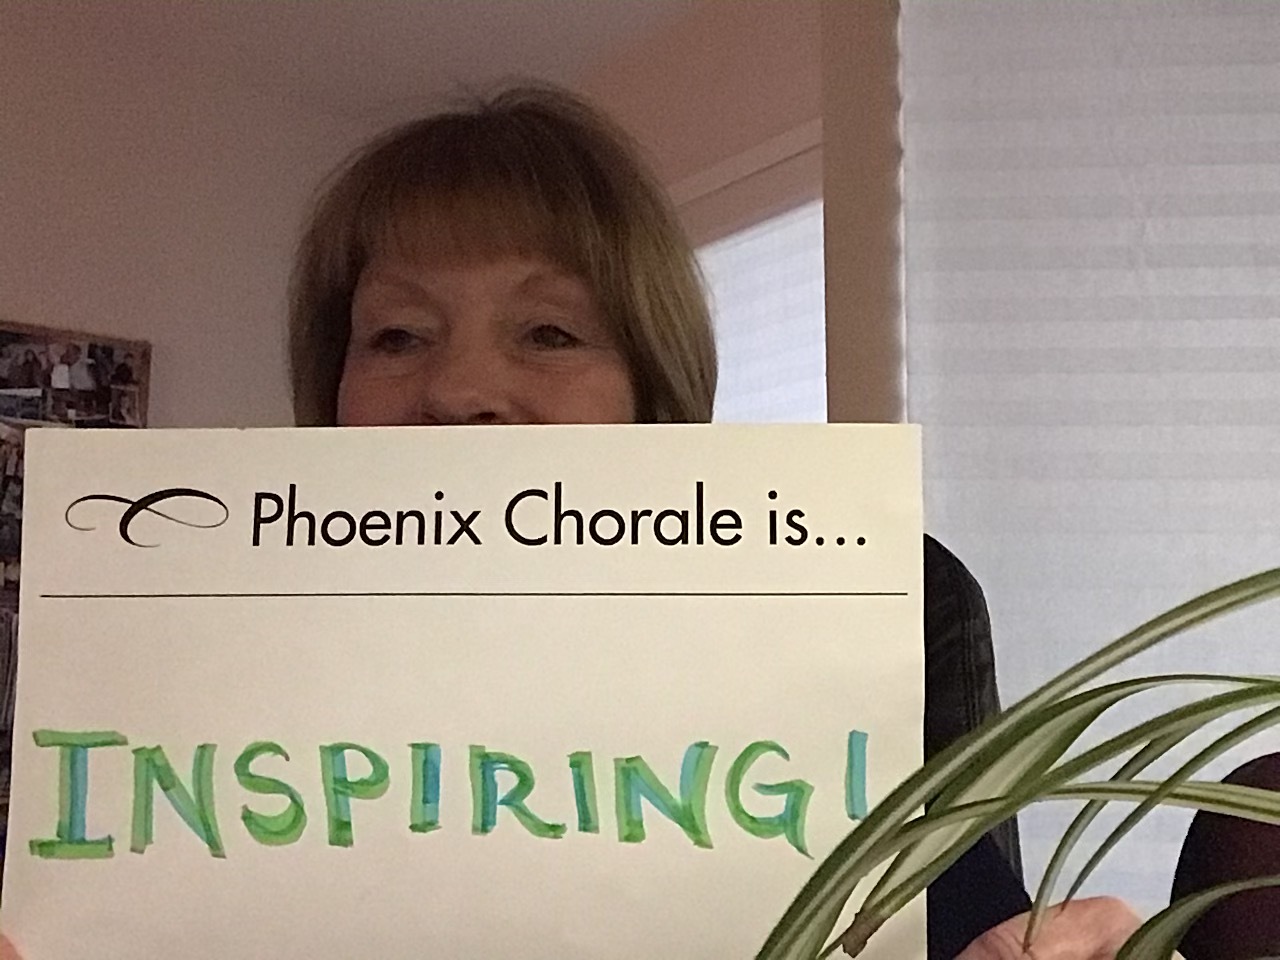 Phoenix Chorale is inspiring 